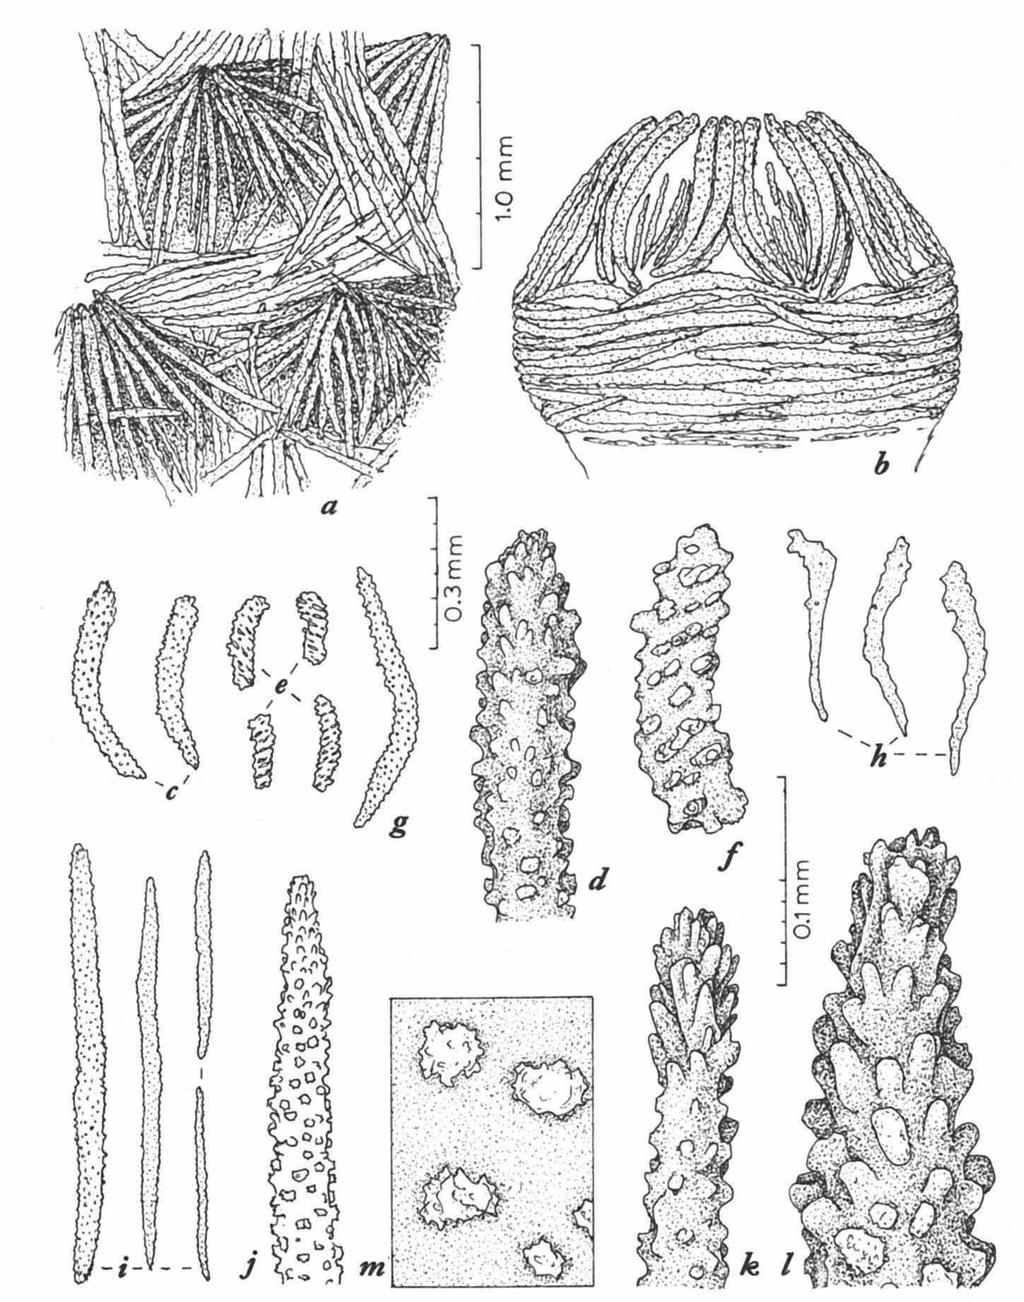 150 ZOOLOGISCHE MEDEDELINGEN 56(1982) Fig. 4. Siphonogorgia lobata sp. nov.